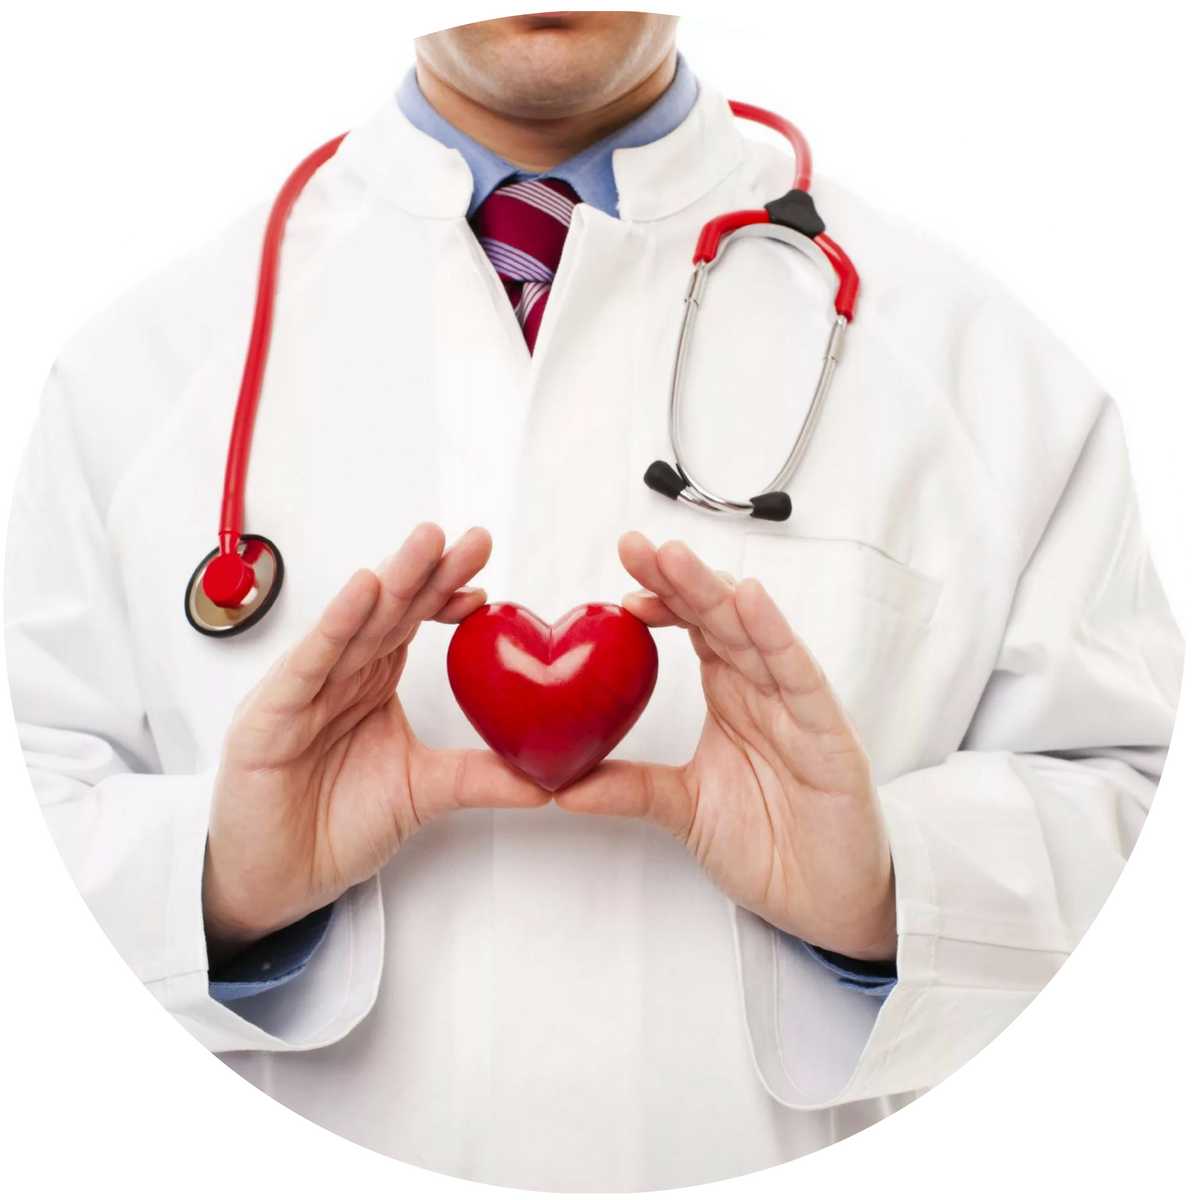 Прием врачей кардиологического центра. Врач с сердцем. Сердце кардиология. Сердце кардиолог. Сердечко медицина.